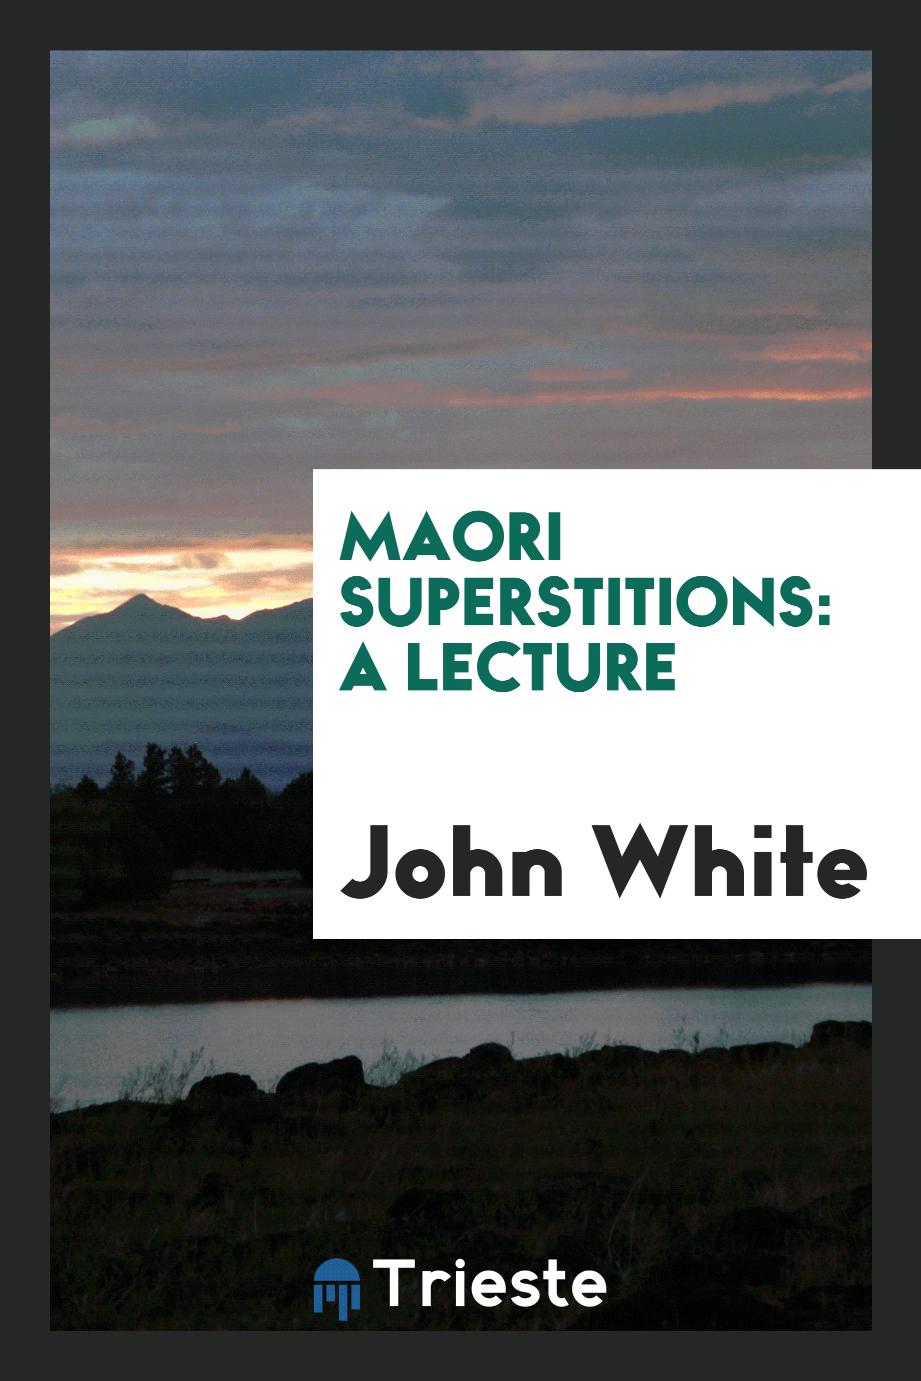 Maori Superstitions: A Lecture